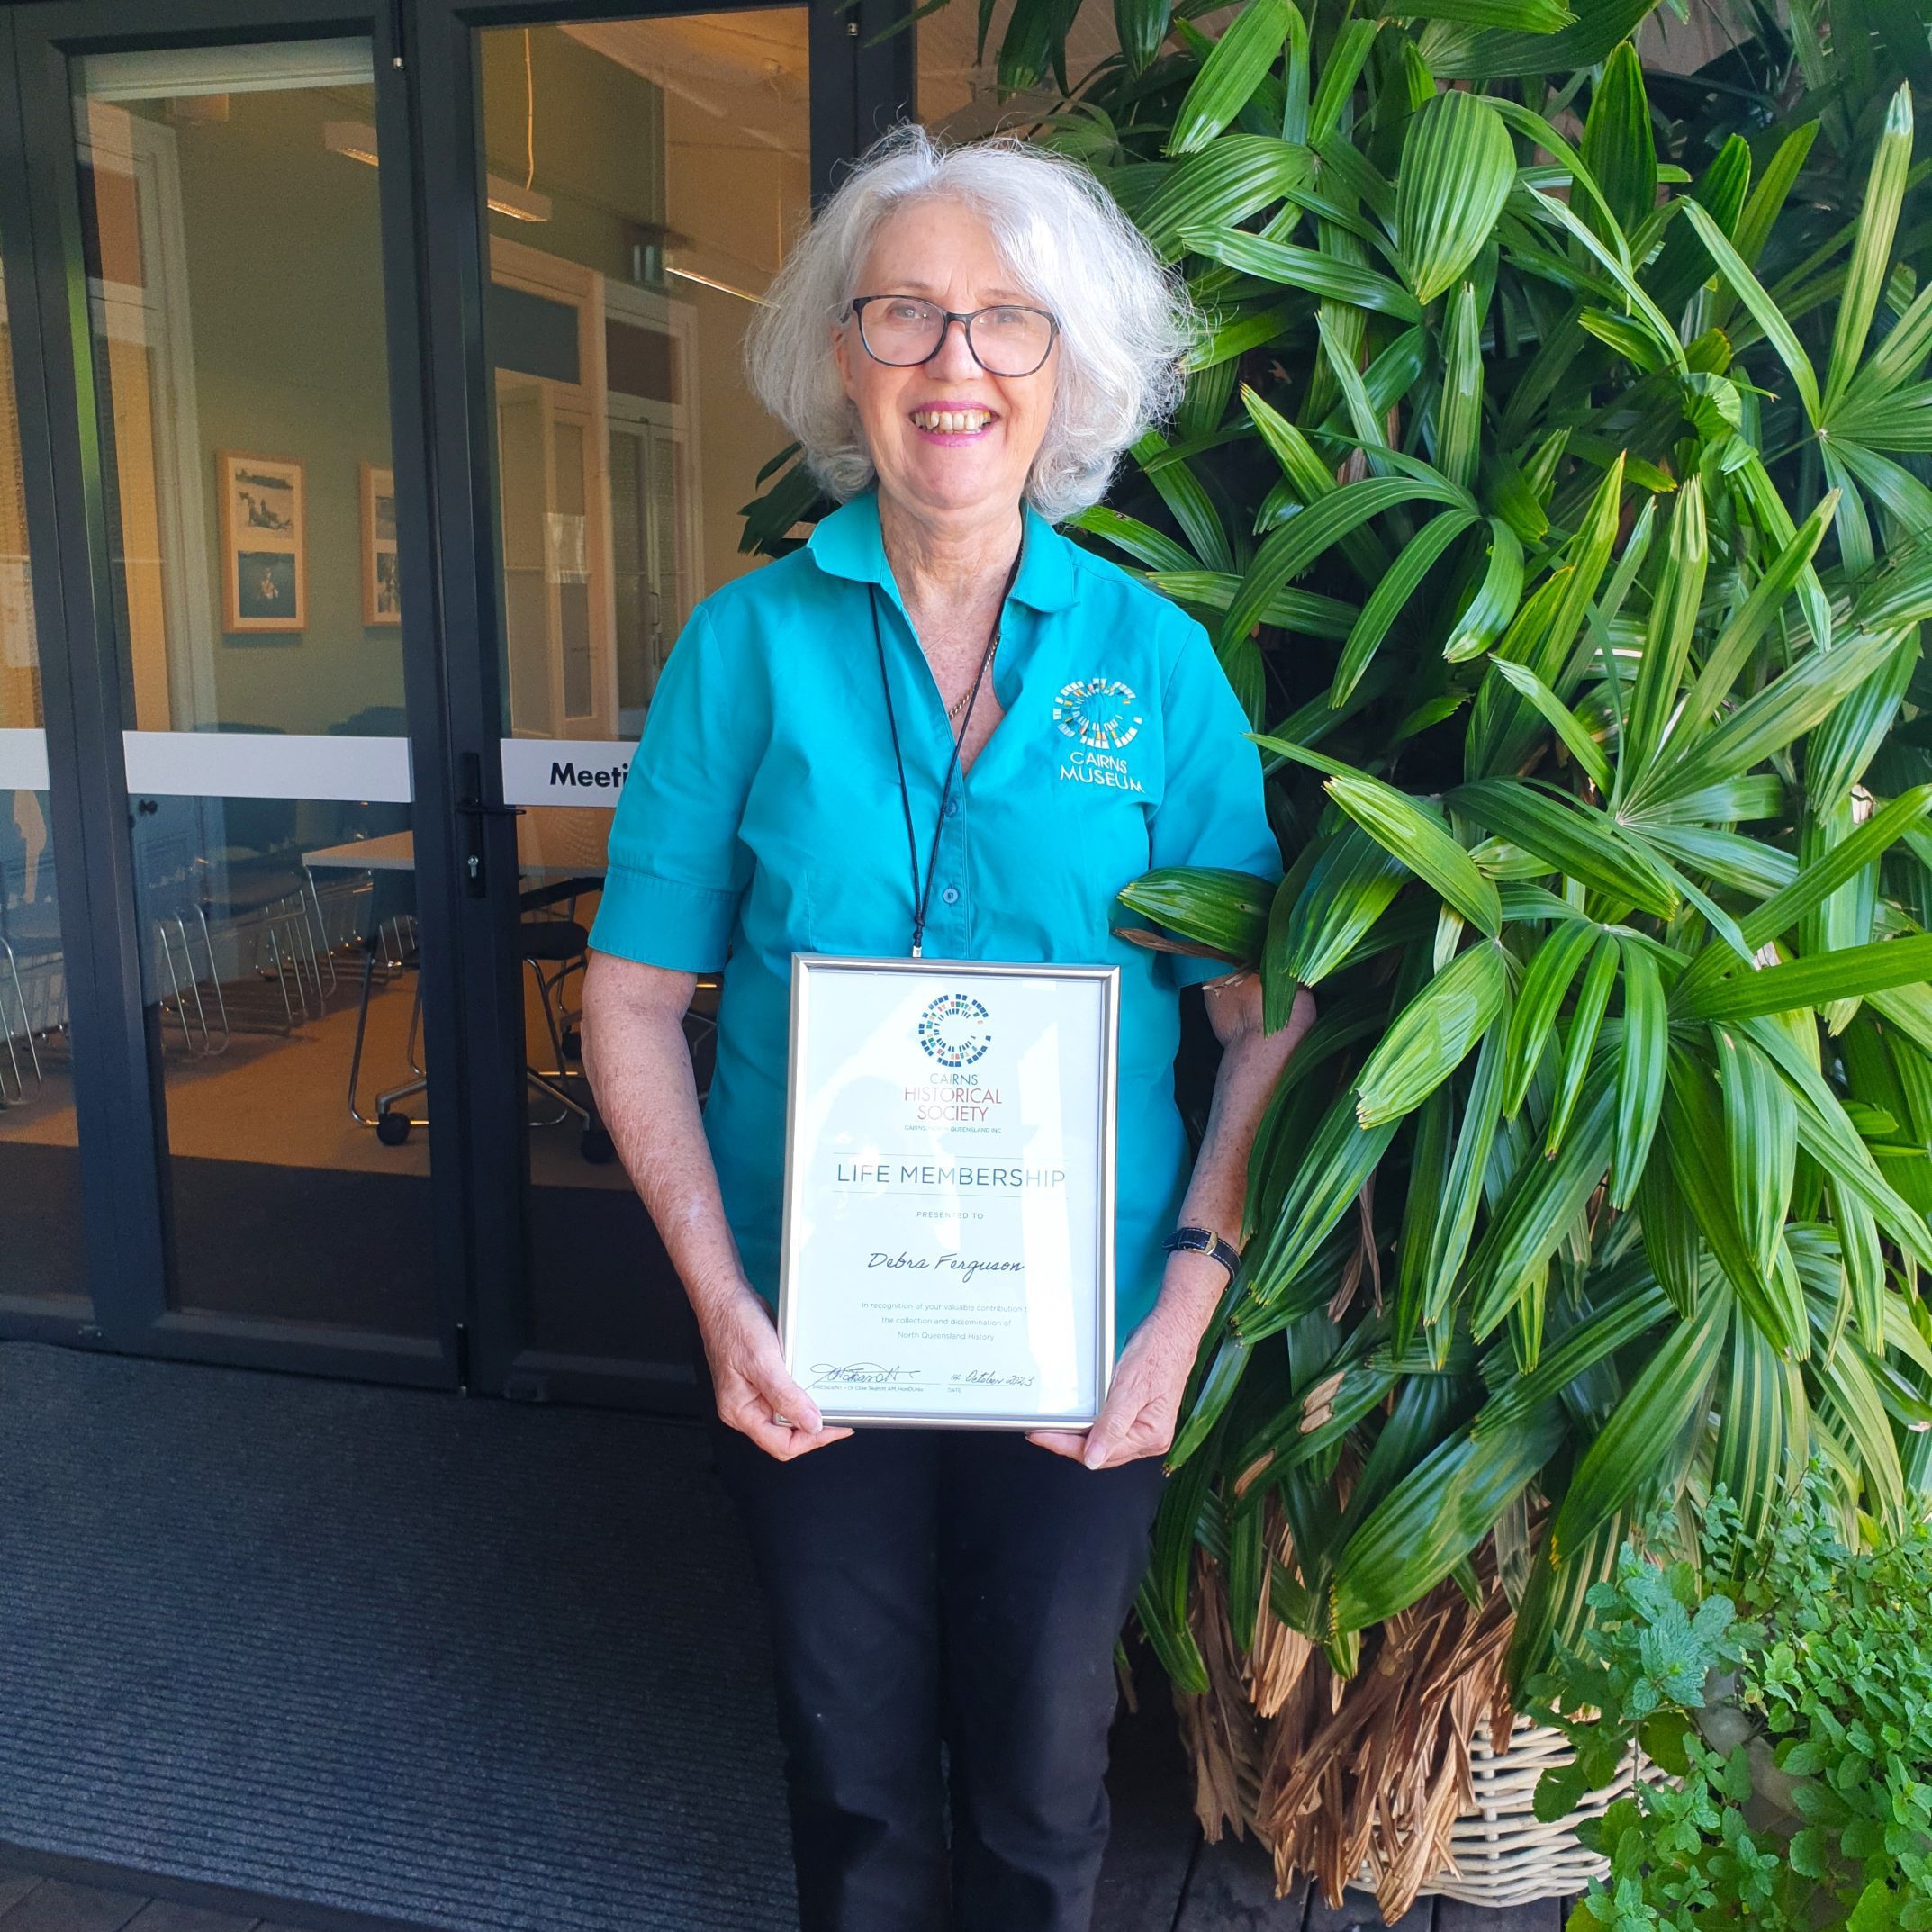 Debra Ferguson, winner of the Life Membership Award